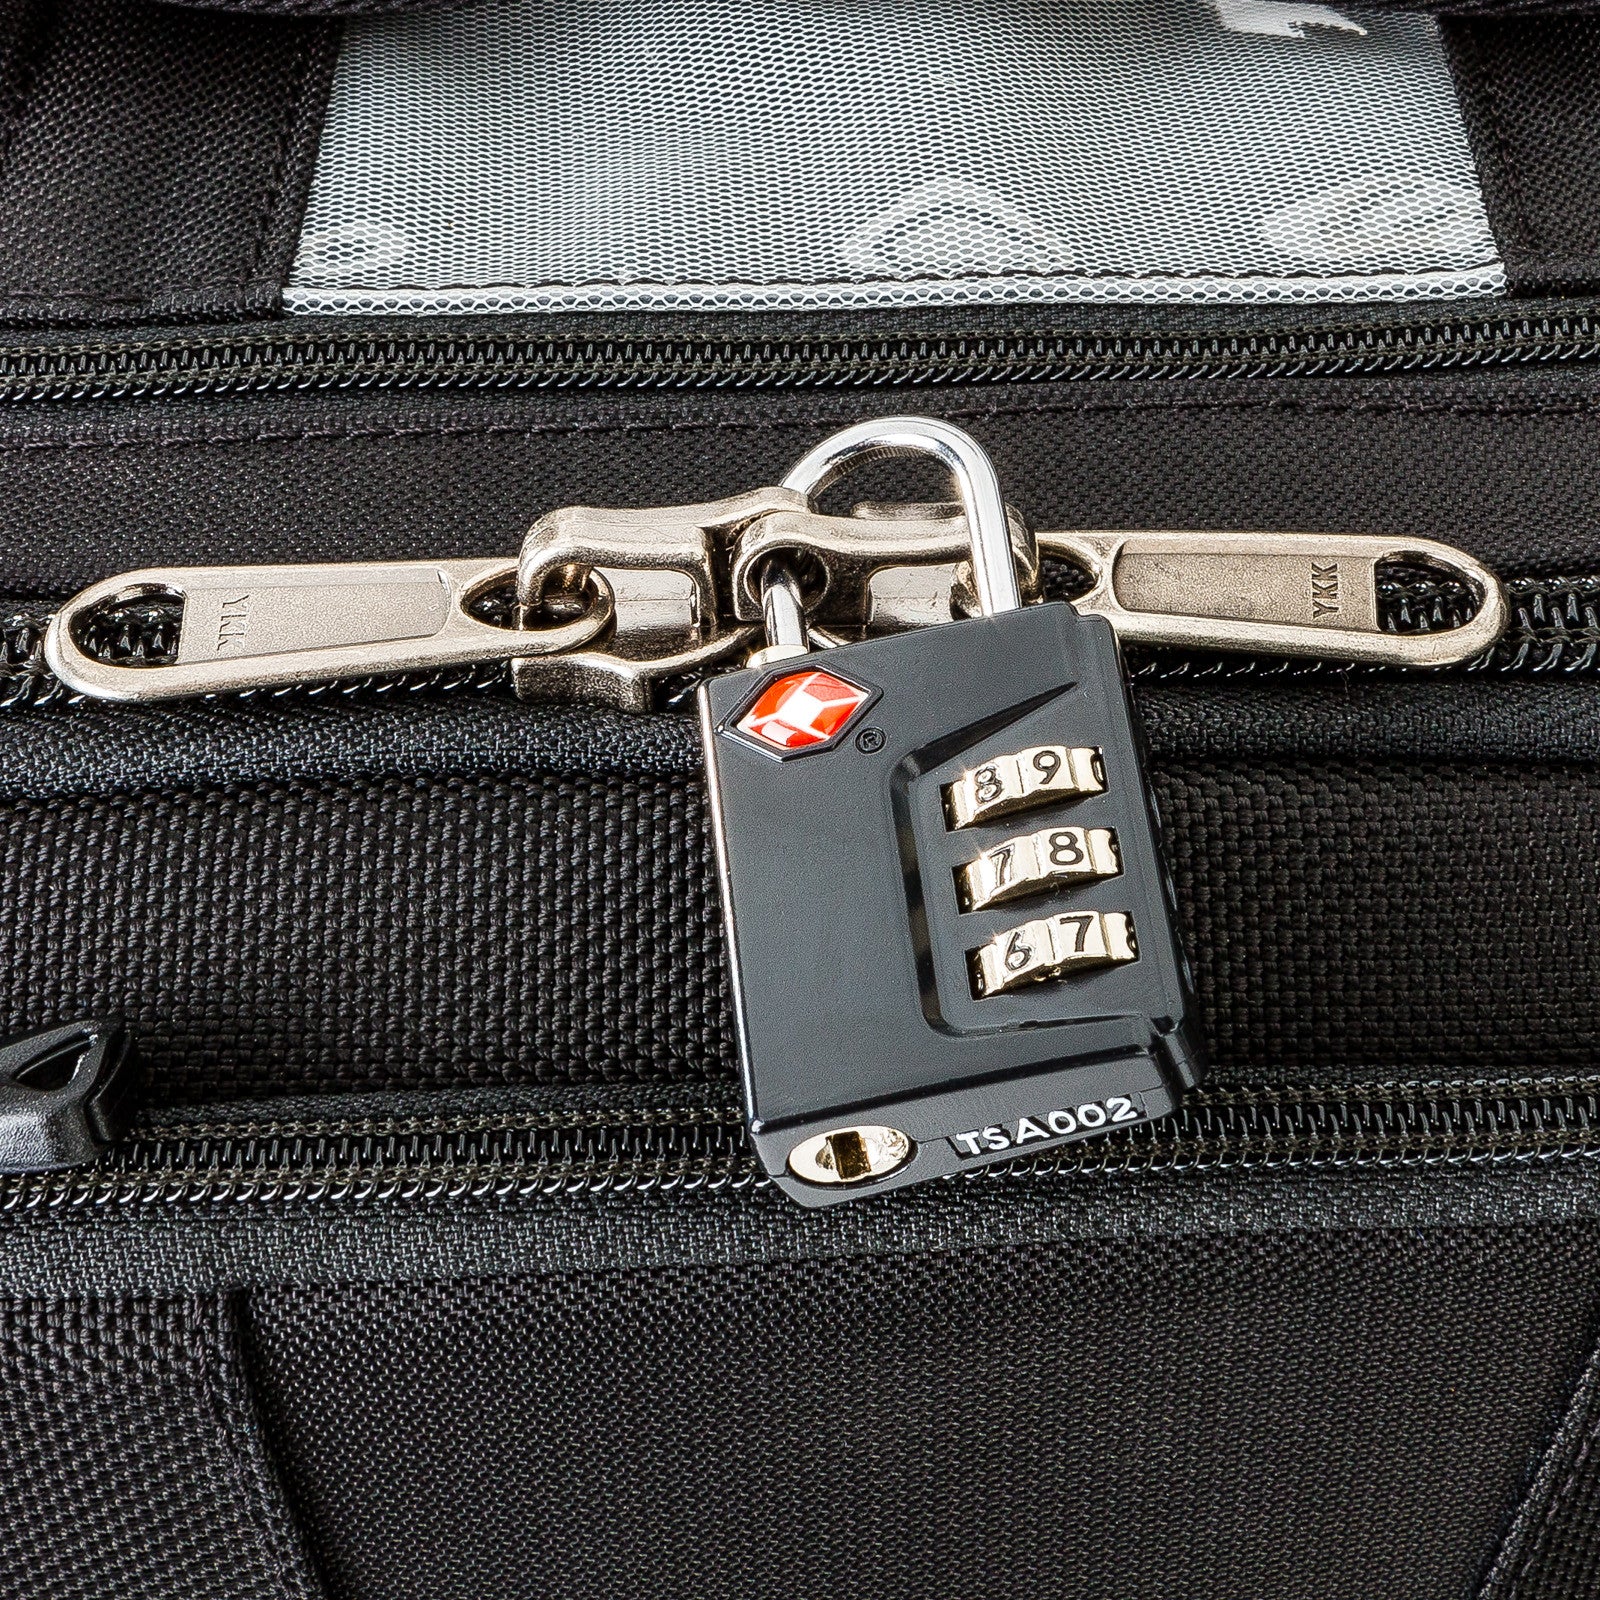 Locking zipper sliders on main compartment